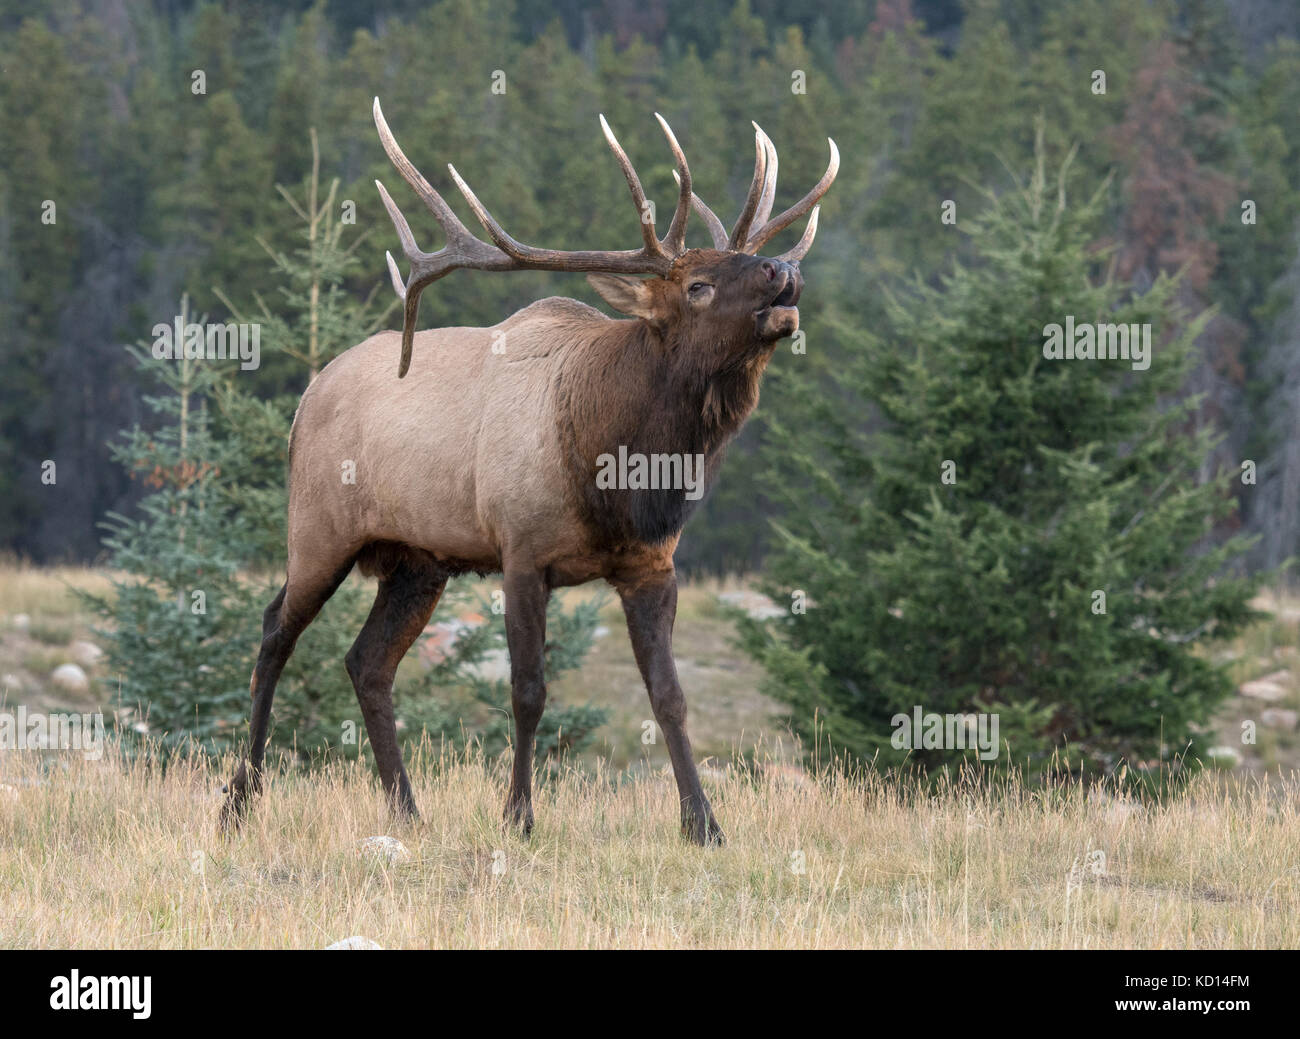 Bull elk bugling, Rut verhalten, Wandern am Rand des Waldes, (Cervus canadensis), Jasper National Park, Alberta, Kanada Stockfoto